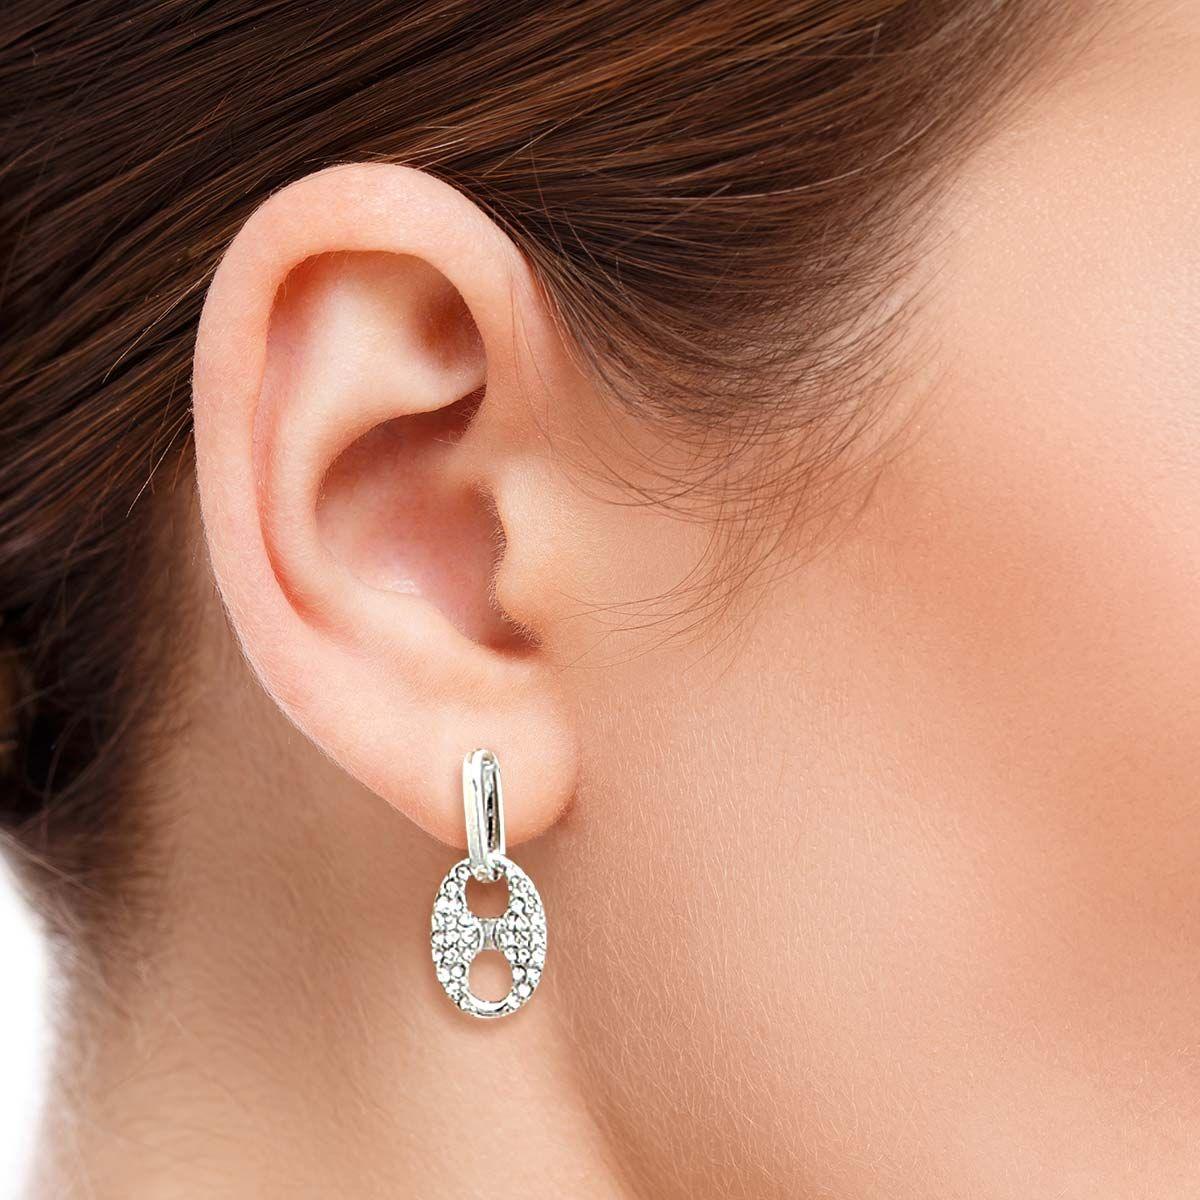 Get Elegant Rhodium Plated Matelot Earrings - Perfect Accessory